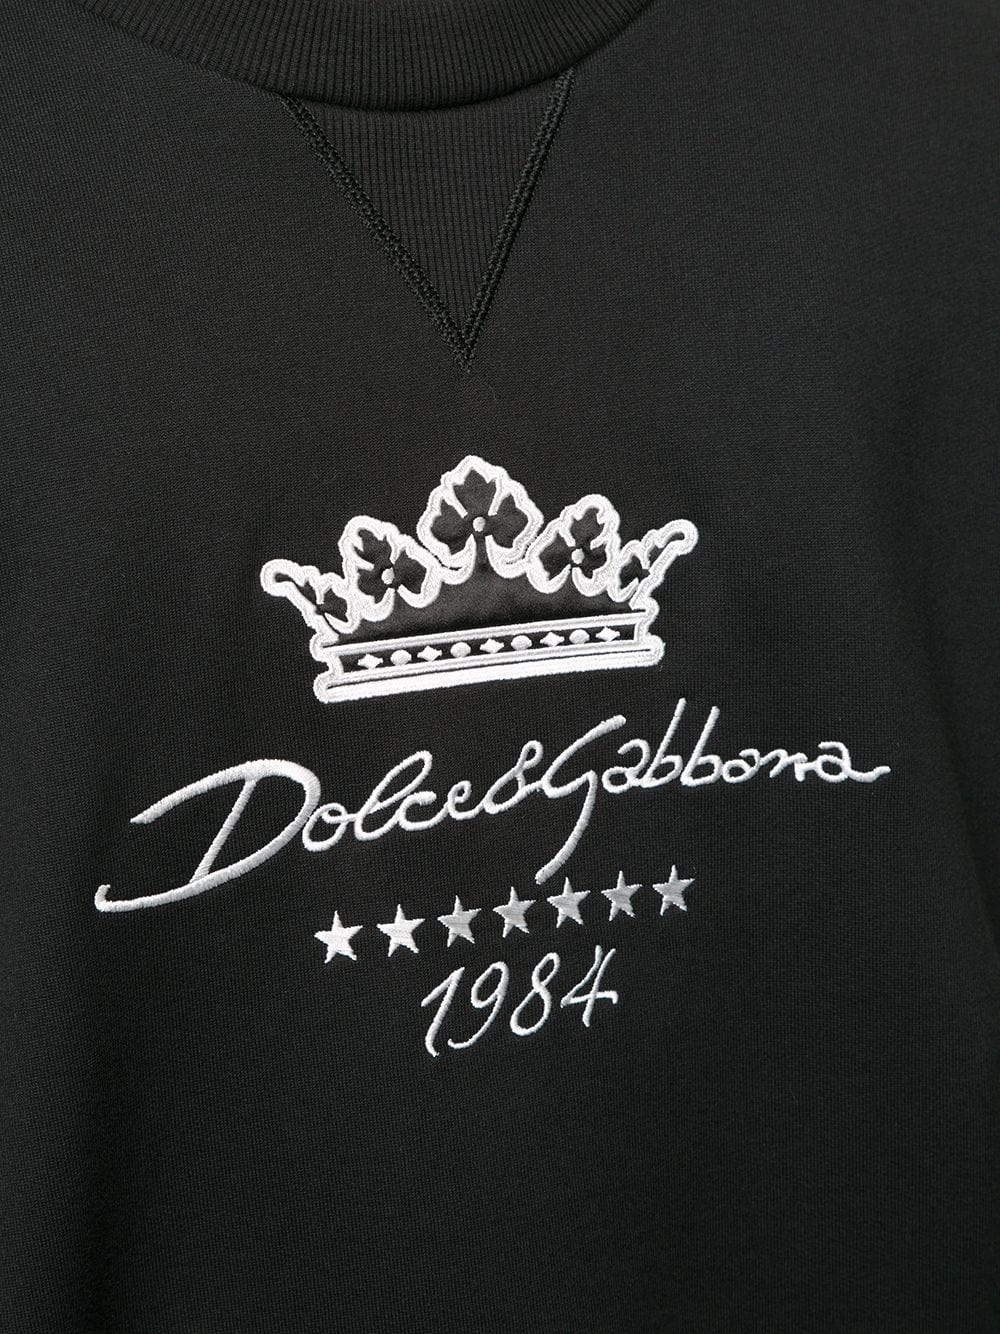 Dolce & Gabbana Men's Logo Sweatshirt